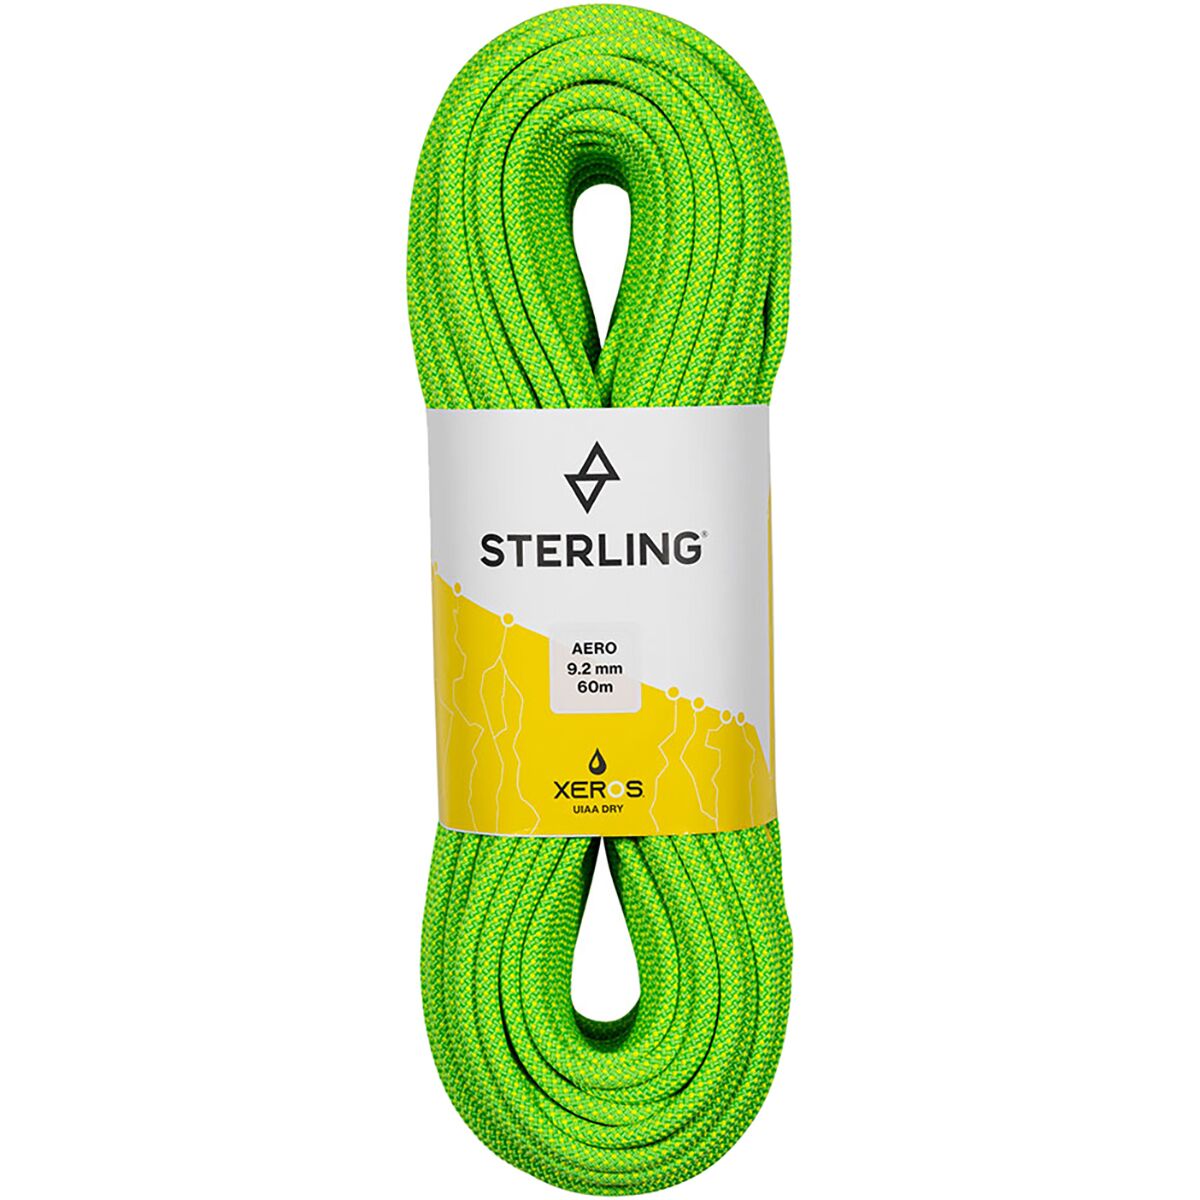 Sterling Aero 9.2 XEROS Rope